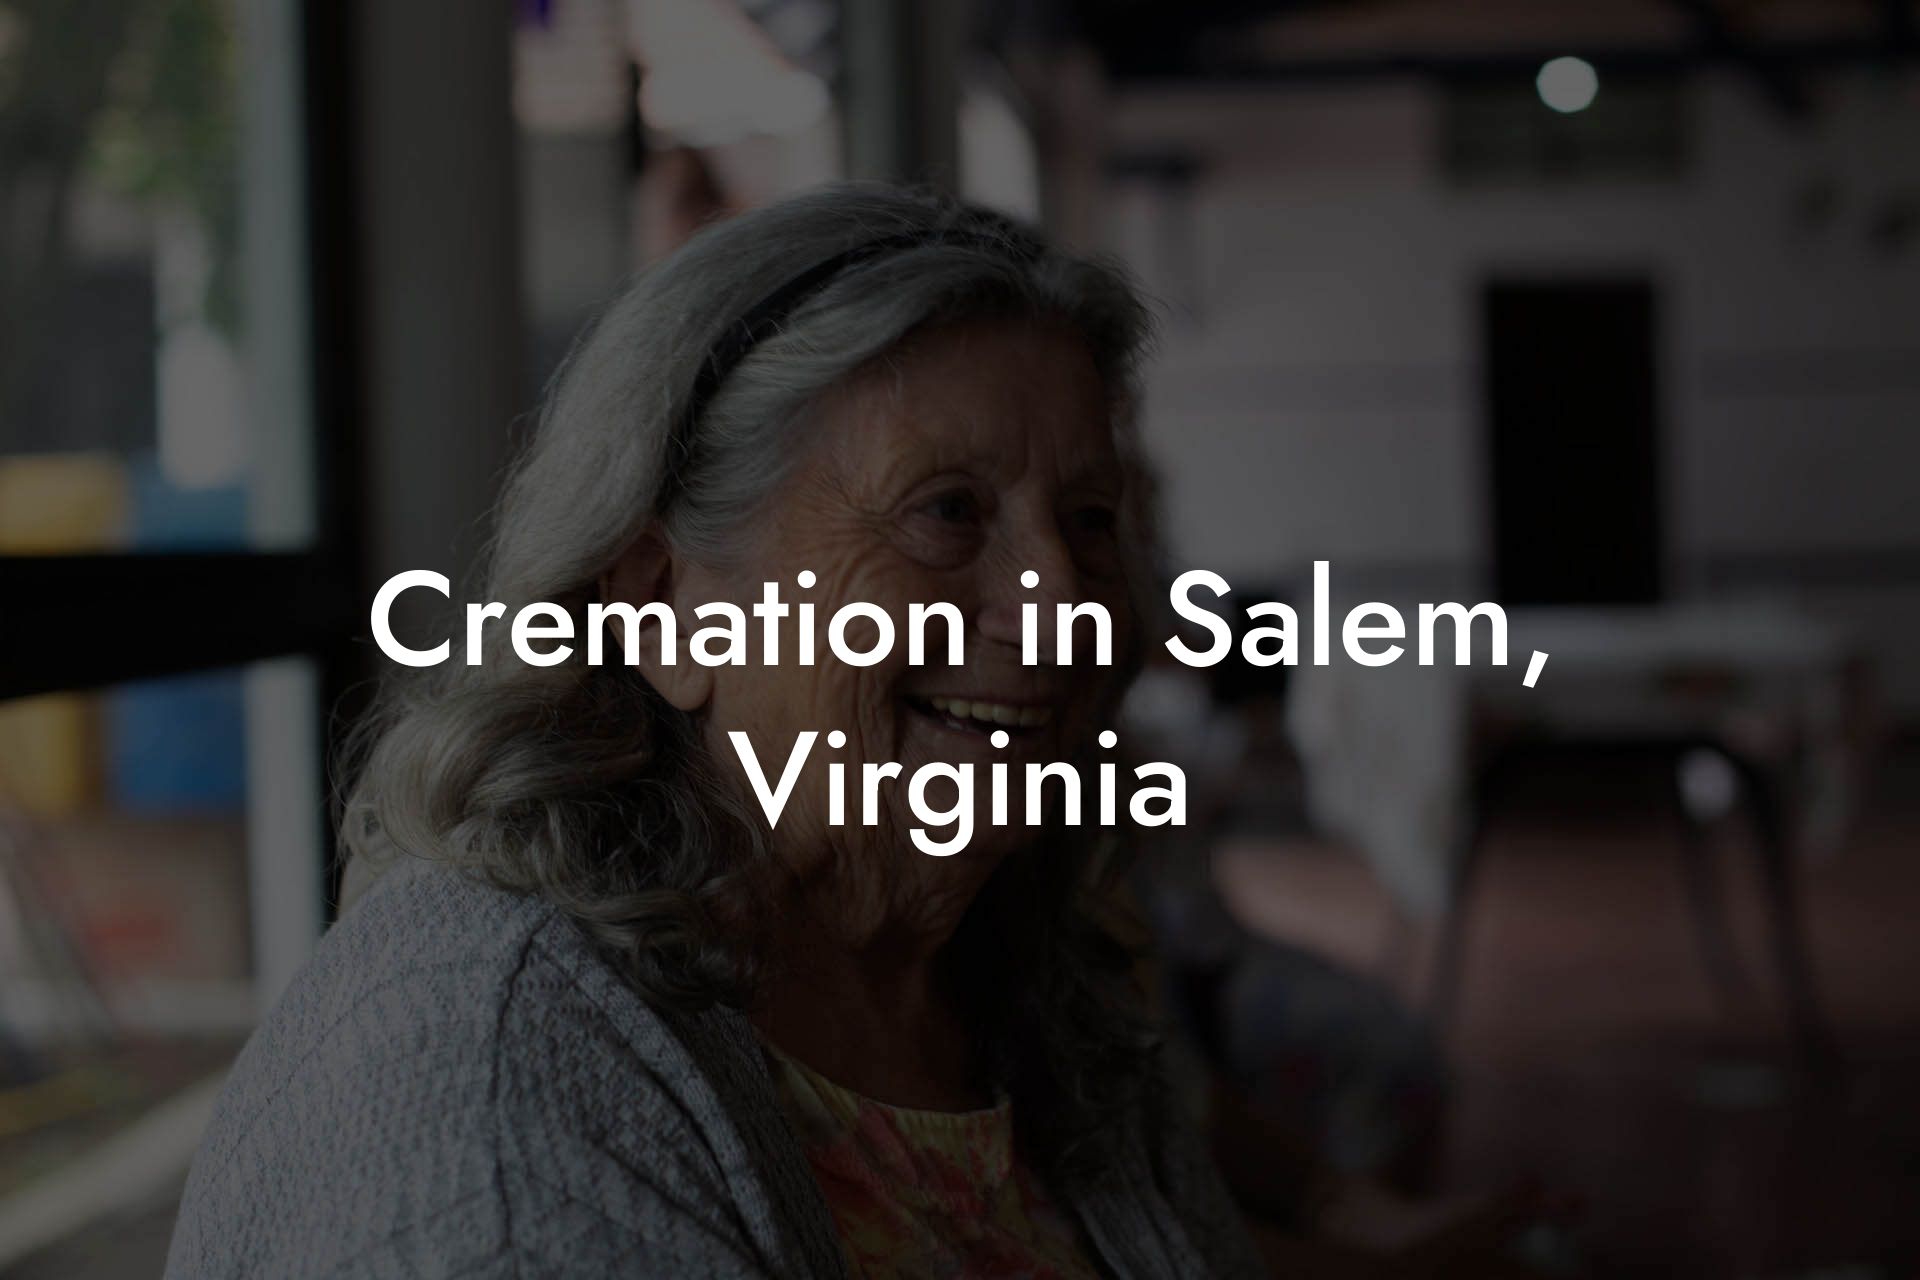 Cremation in Salem, Virginia